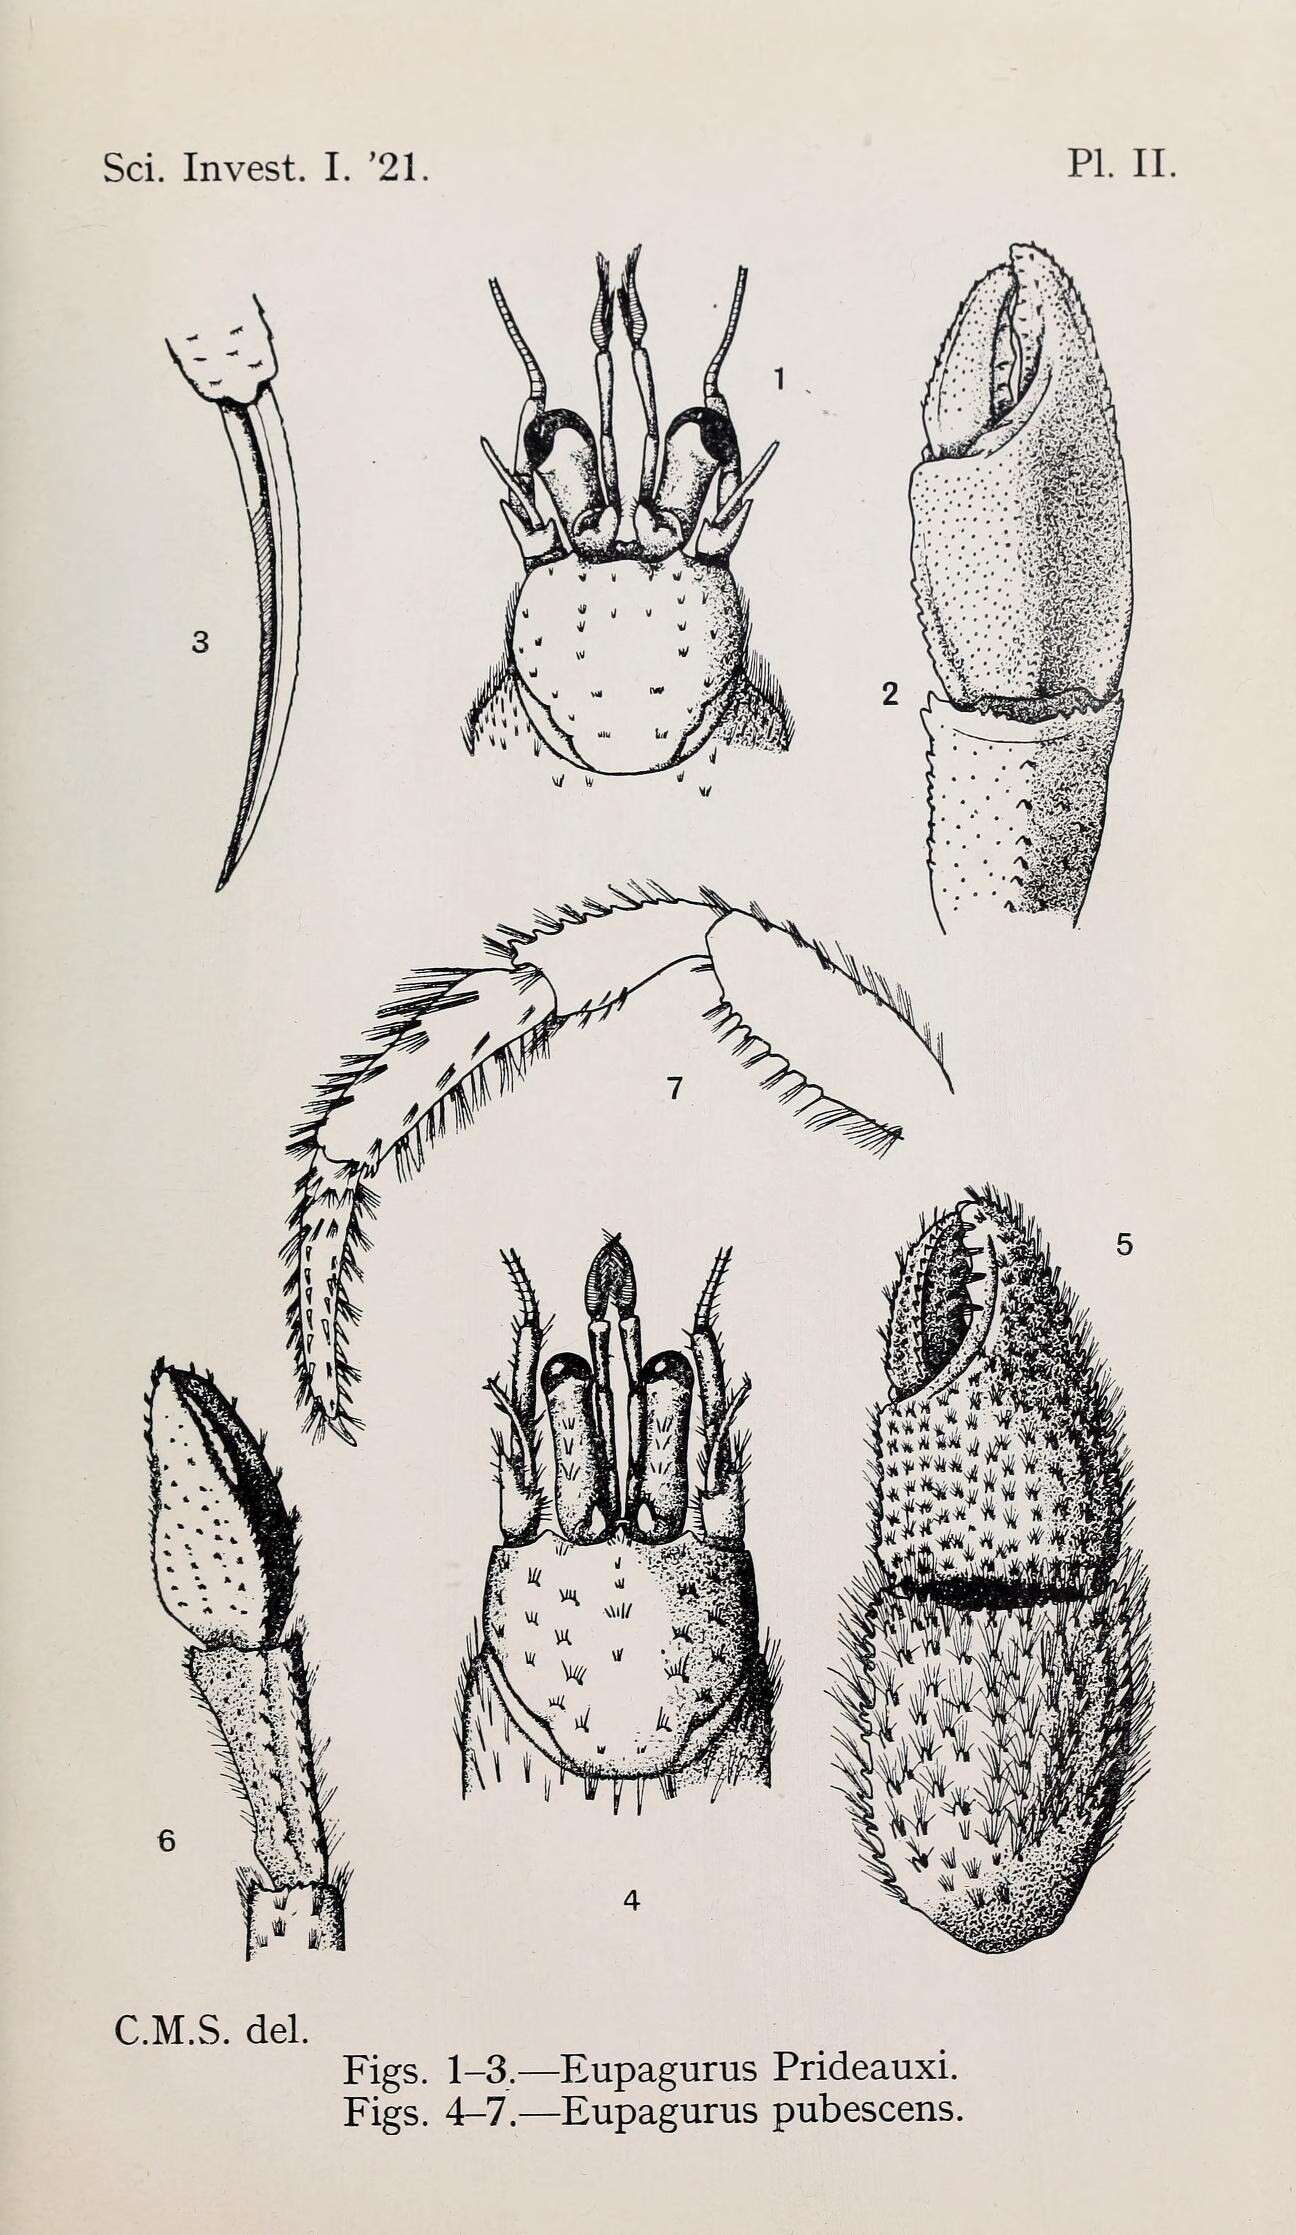 Pagurus pubescens Krøyer 1838 resmi